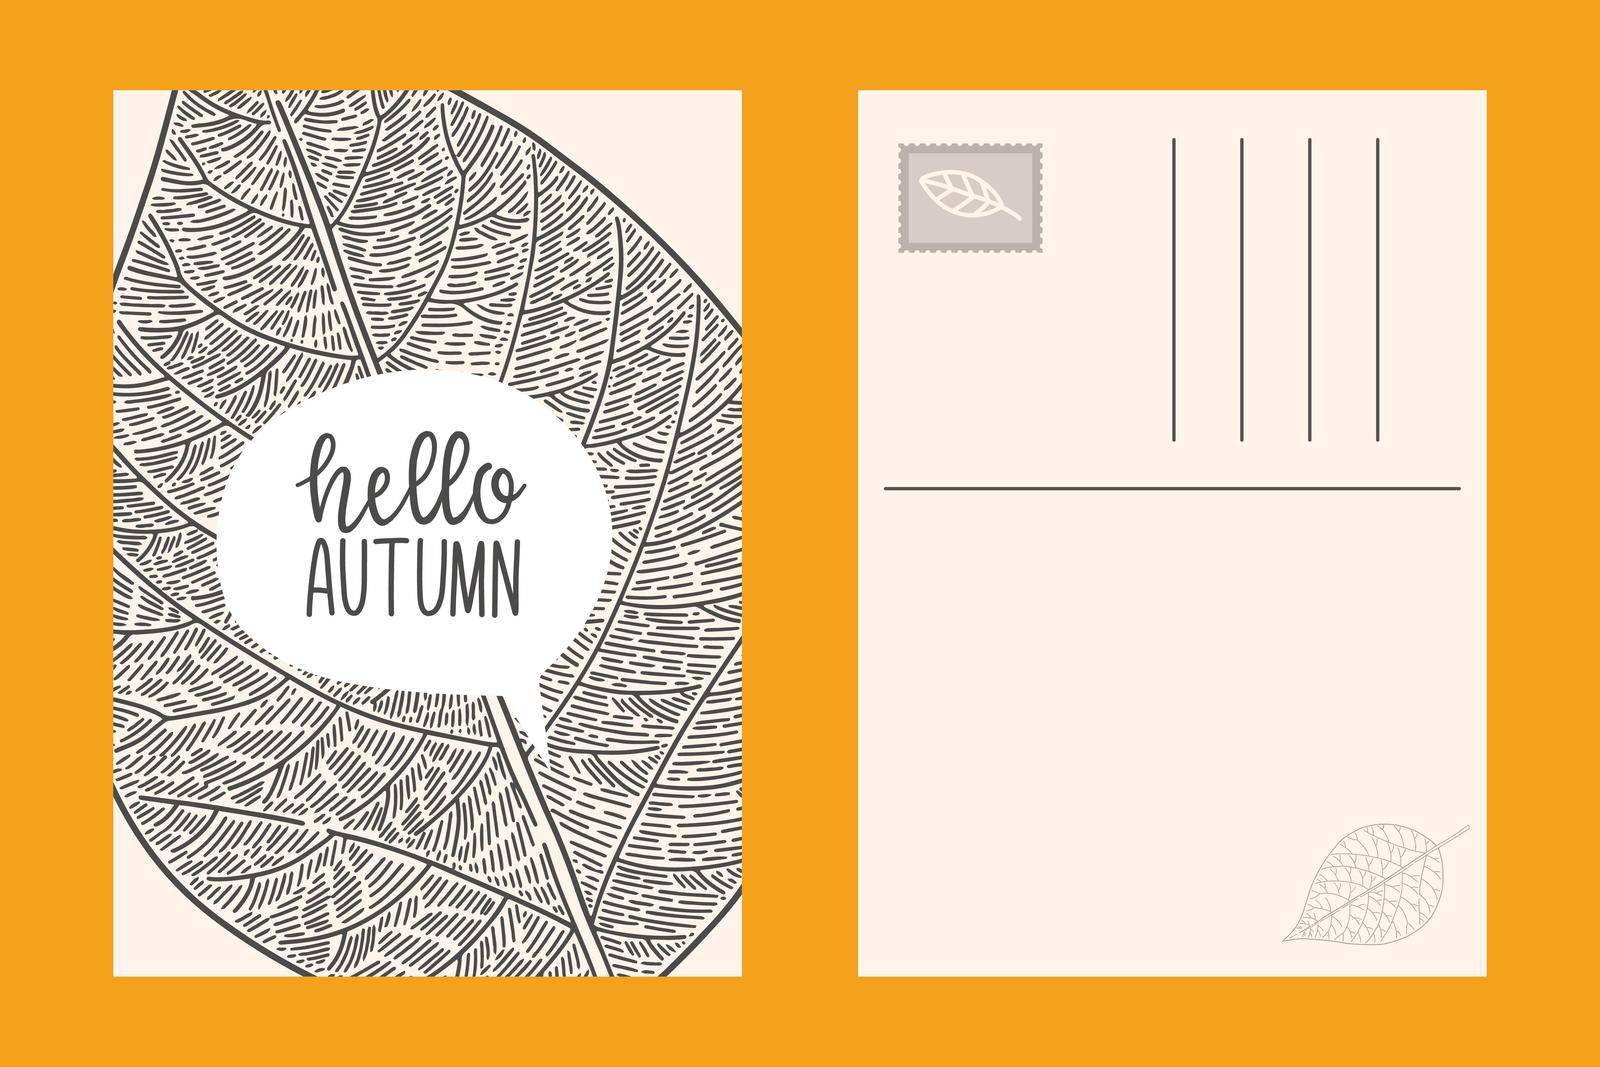 Autumn leaf card vector two sides postcard illustration